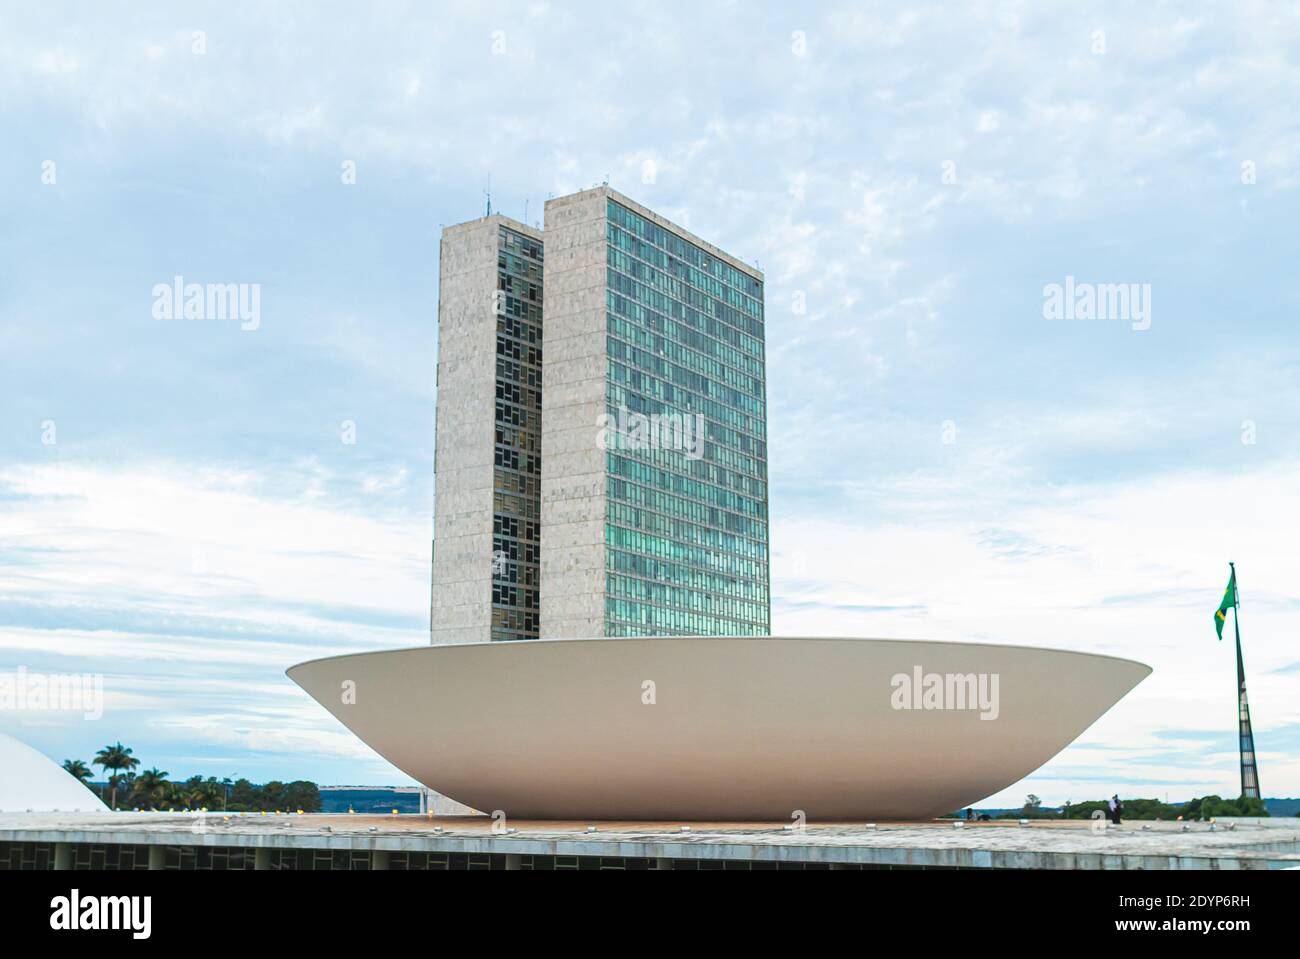 The National Congress of Brazil ( Congresso Nacional do Brasil - Parlamento brasileiro). Building designed by Oscar niemeyer. Stock Photo